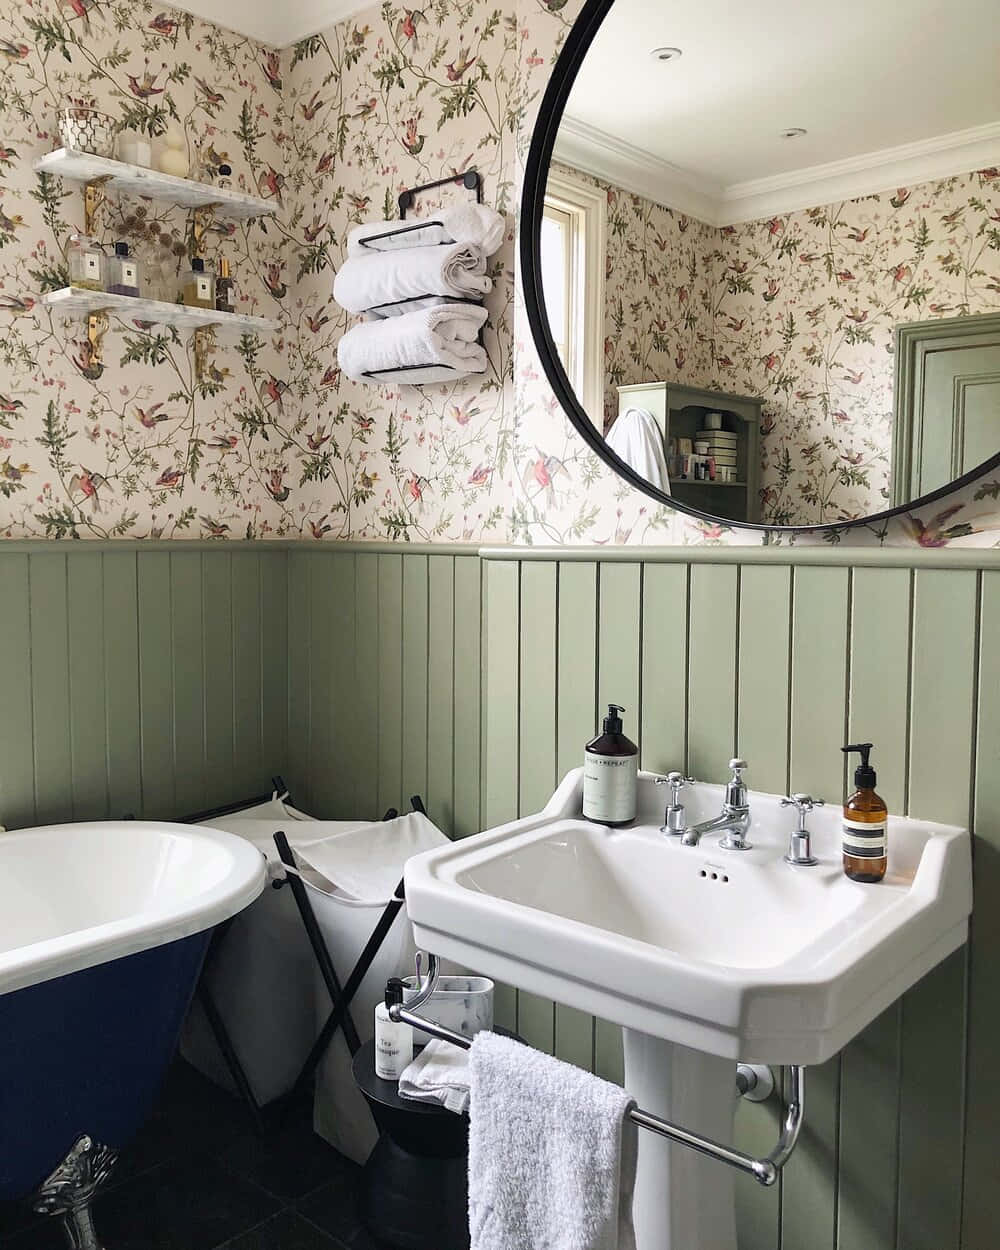 Enjoying a Relaxing Moment in a Modern Home Bathroom